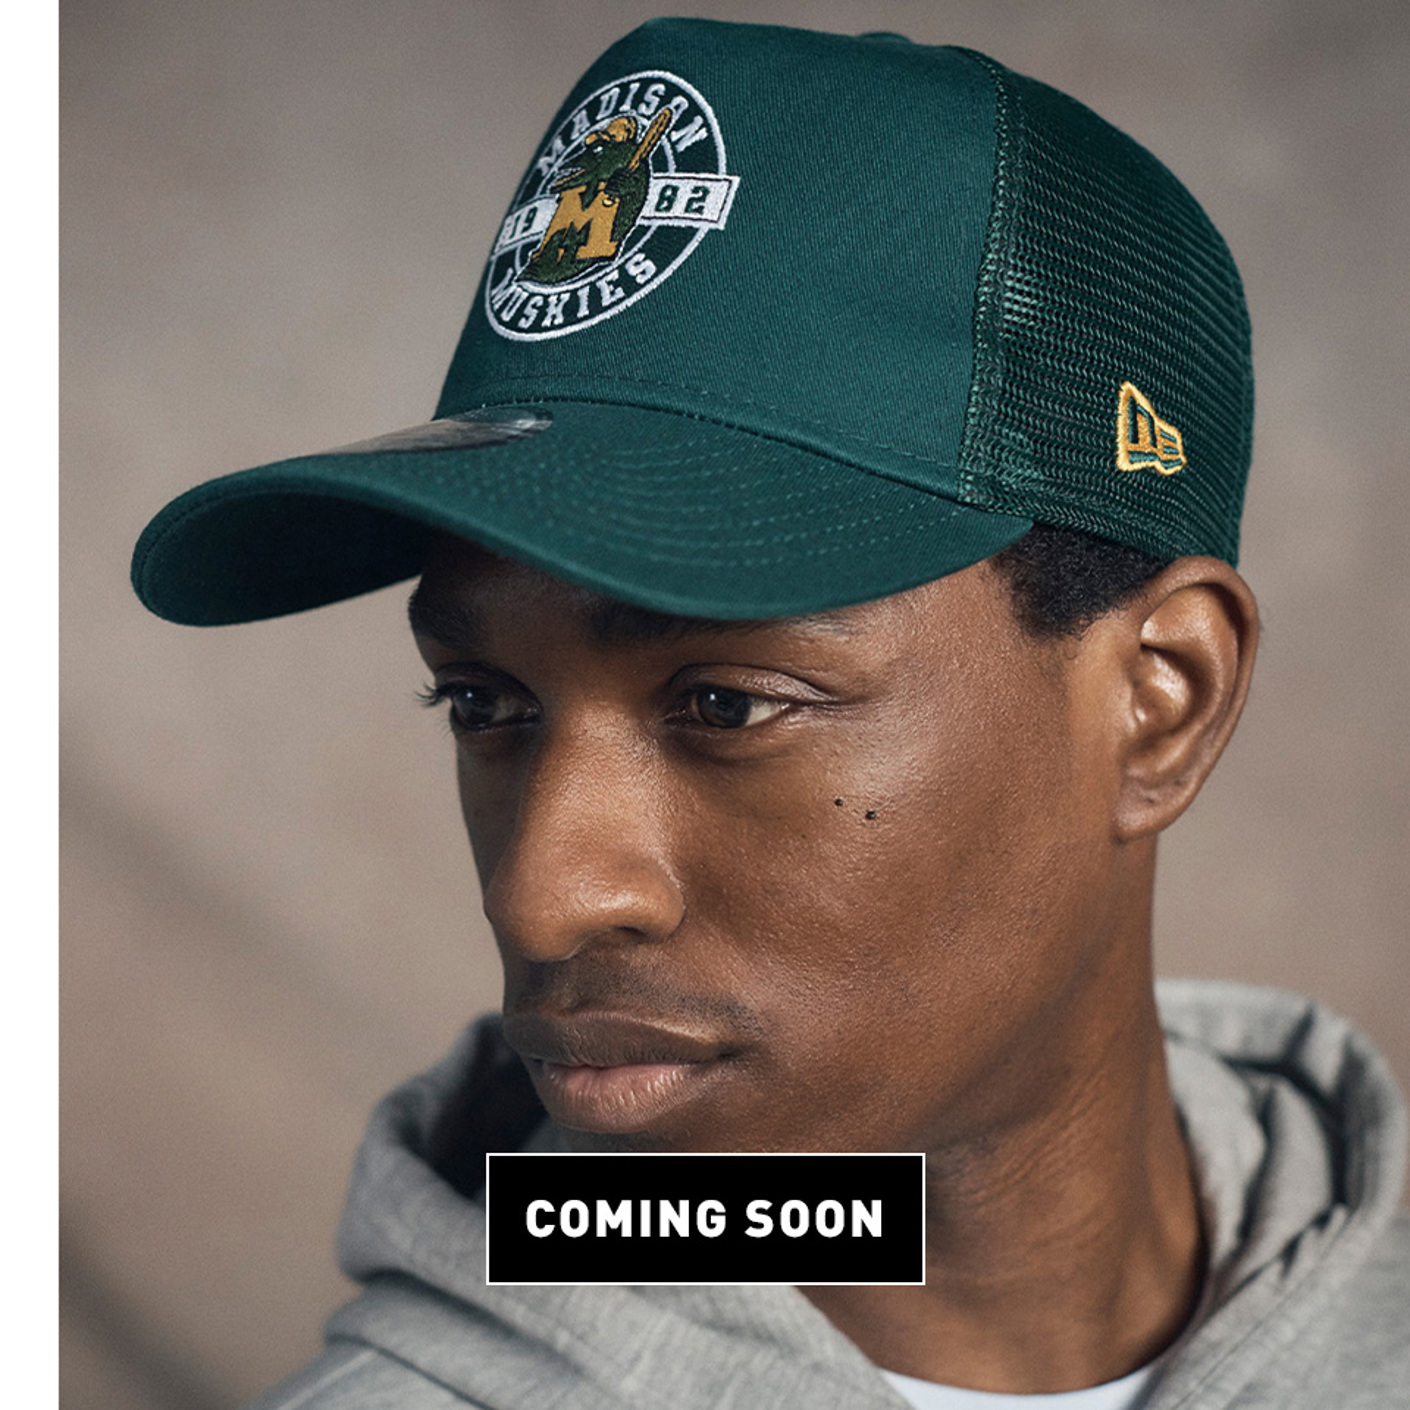 New Era's new season Minor League Baseball green Trucker hat